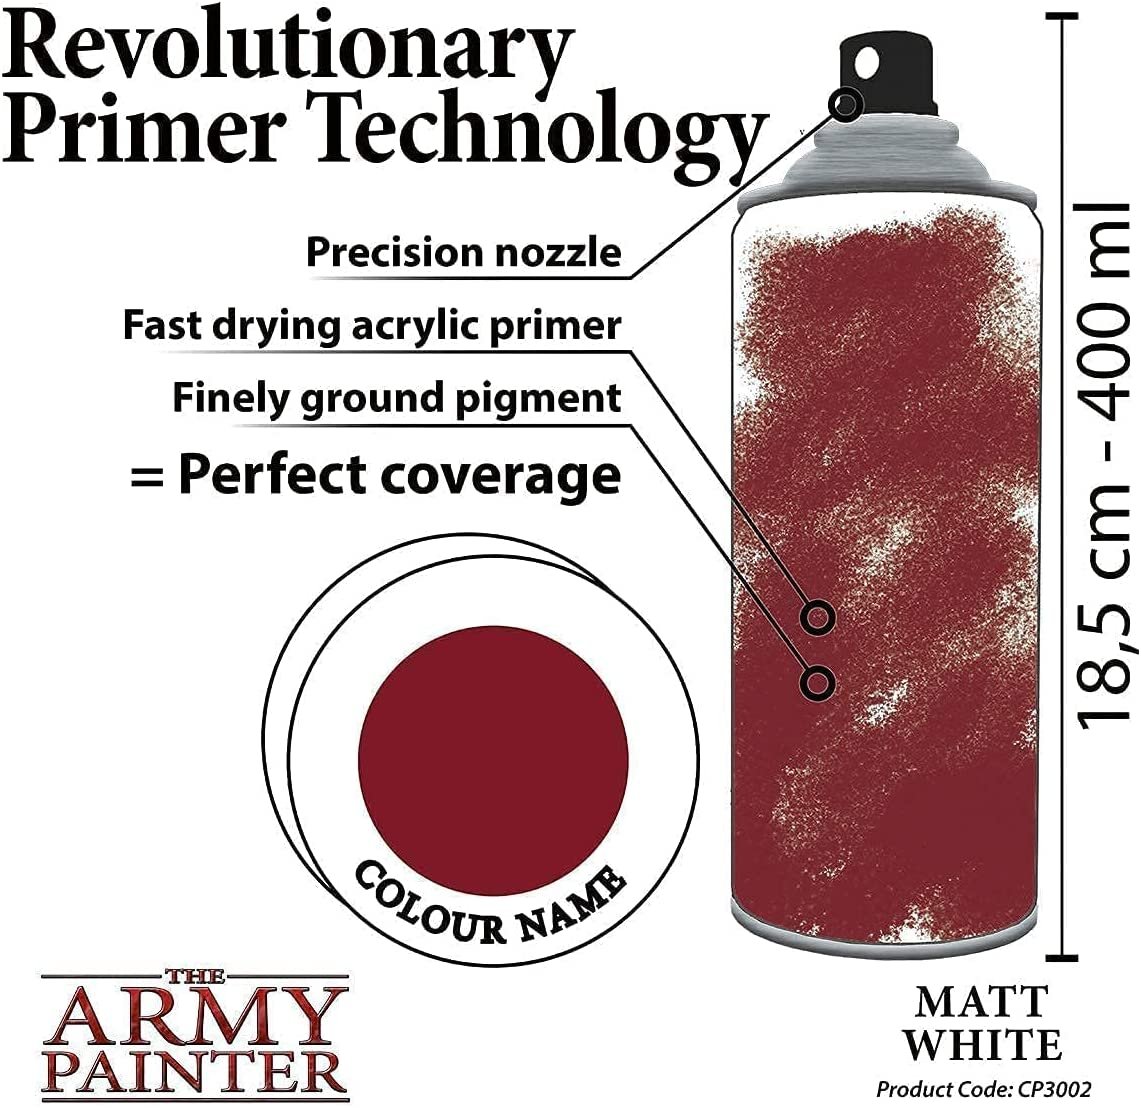 The Army Painter - Colour Primer: Matt Black & Matt White Bundle (400ml/13.5oz)